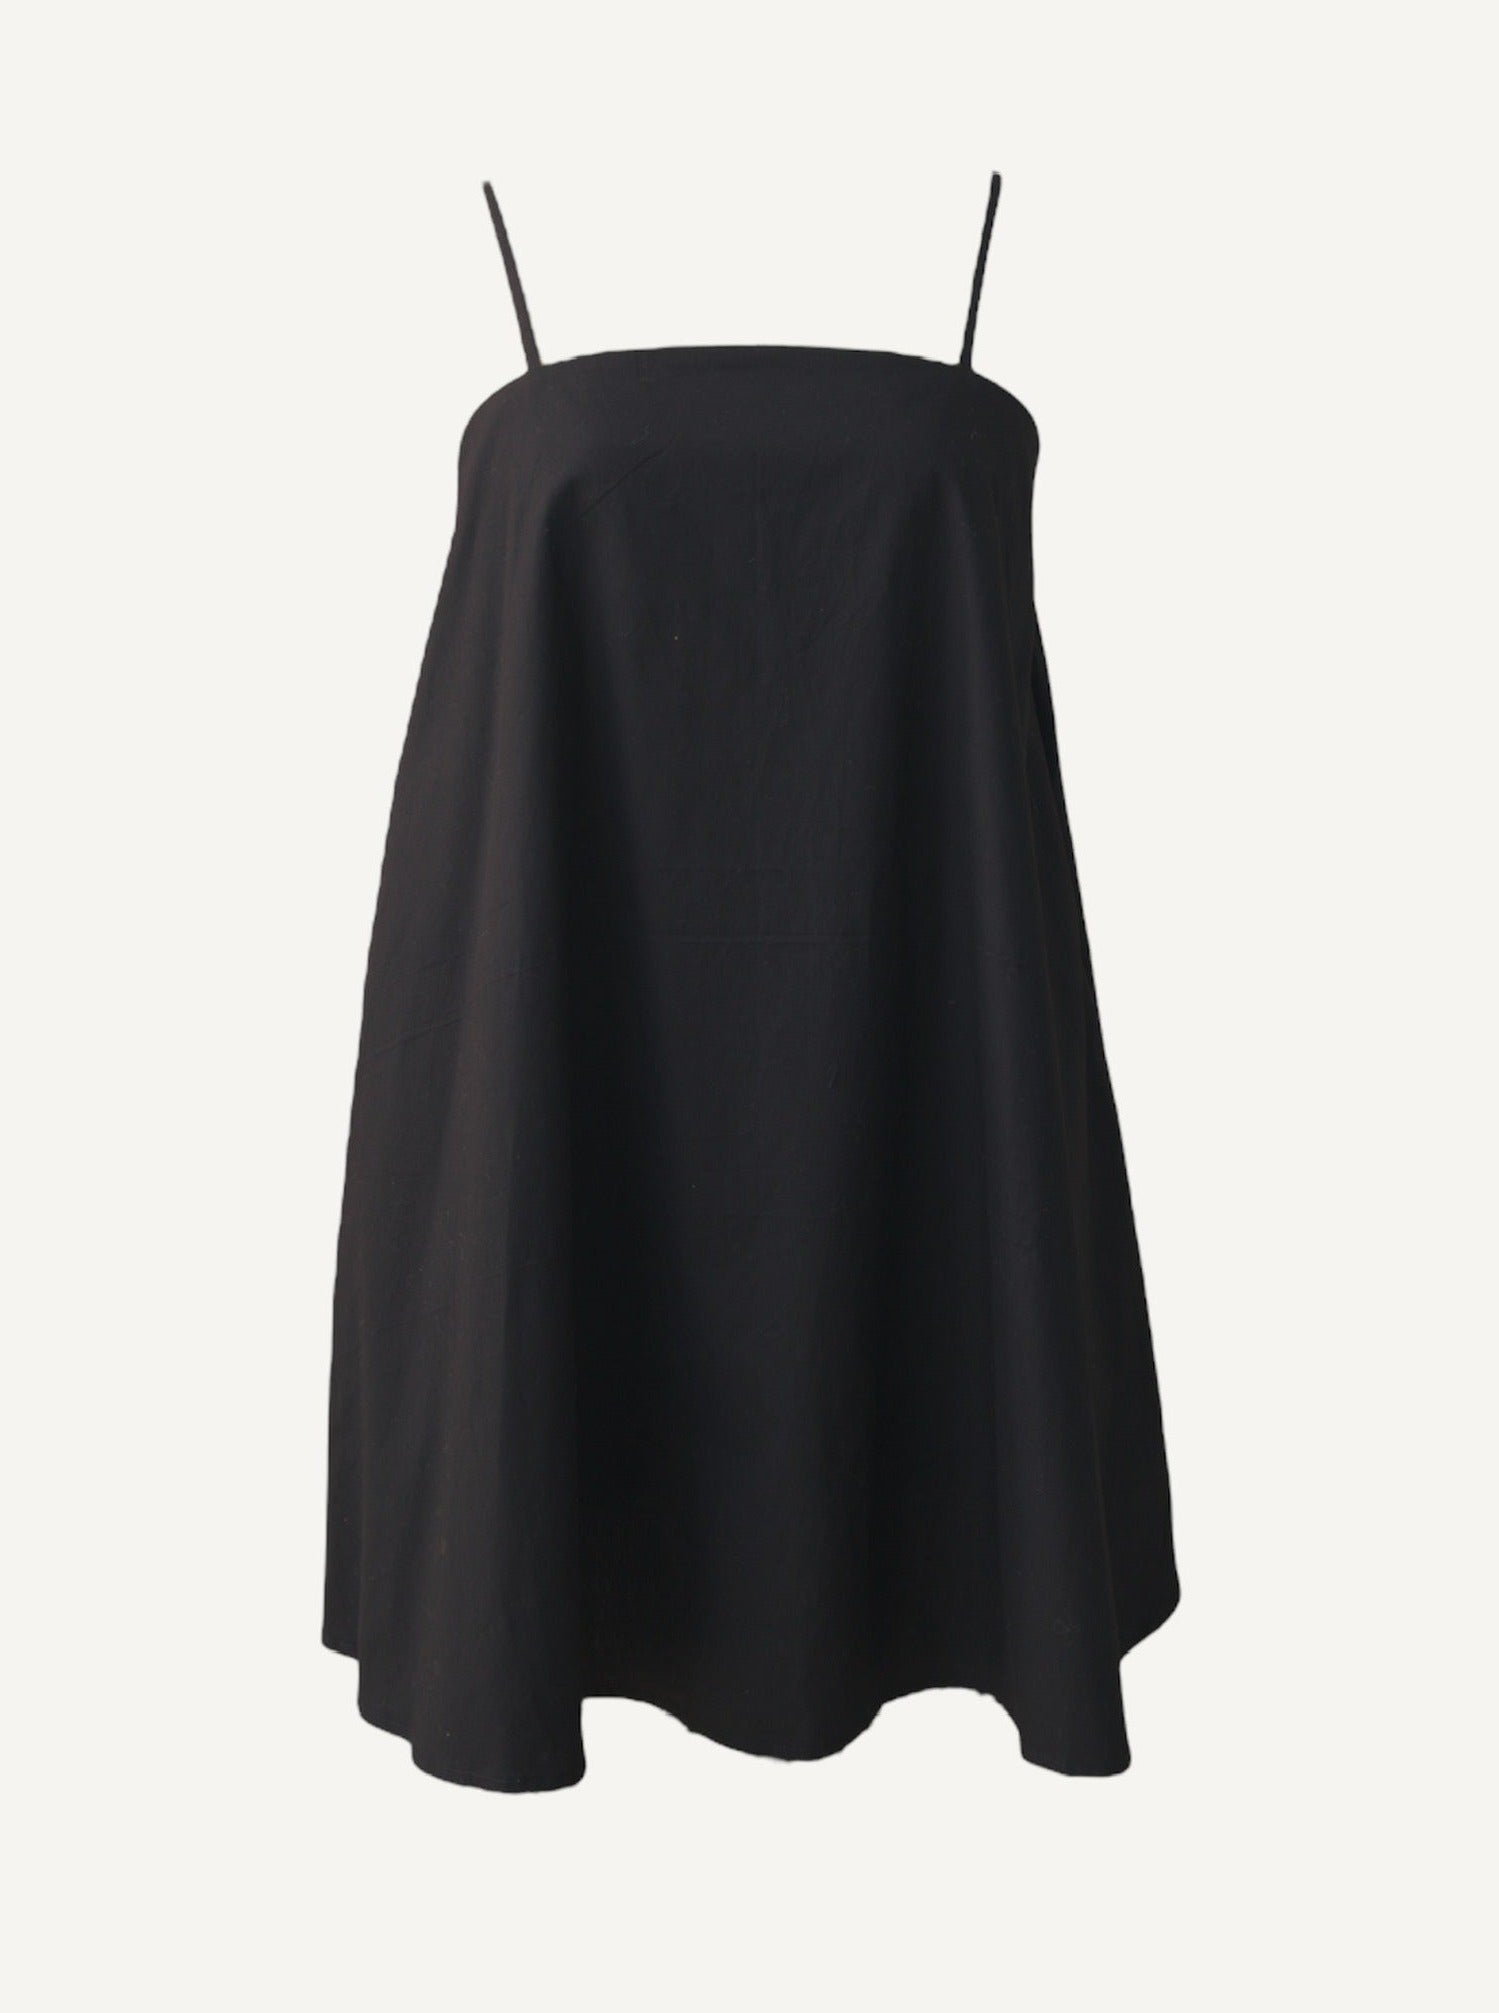 a black flare tent spaghetti strap dress from adrina fanore